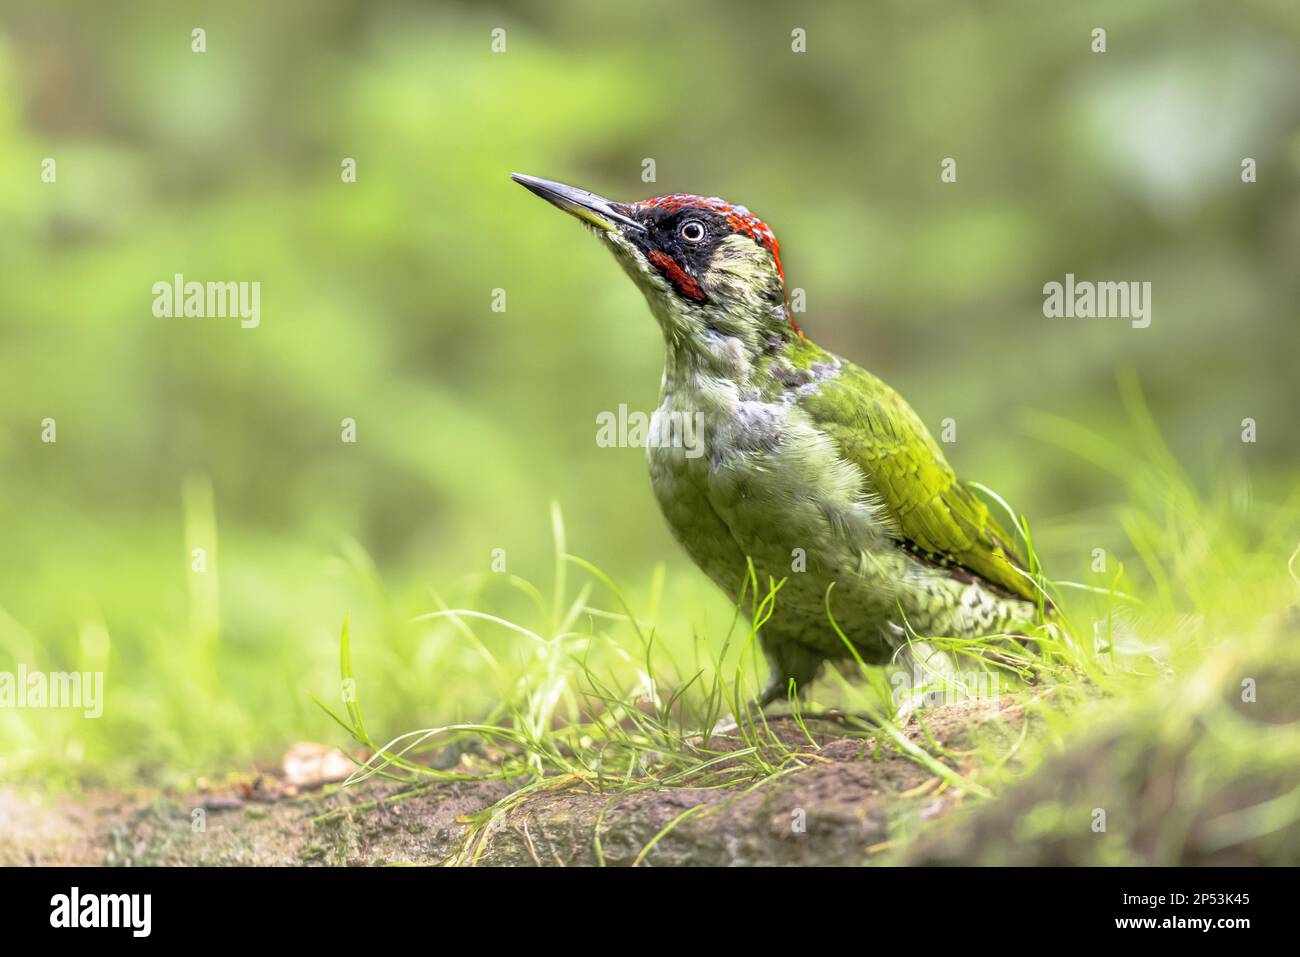 European Green Woodpecker (Picus viridis) on tree in European forest. Bird in natural habitat. Wildlife scene of nature in Europe. Stock Photo